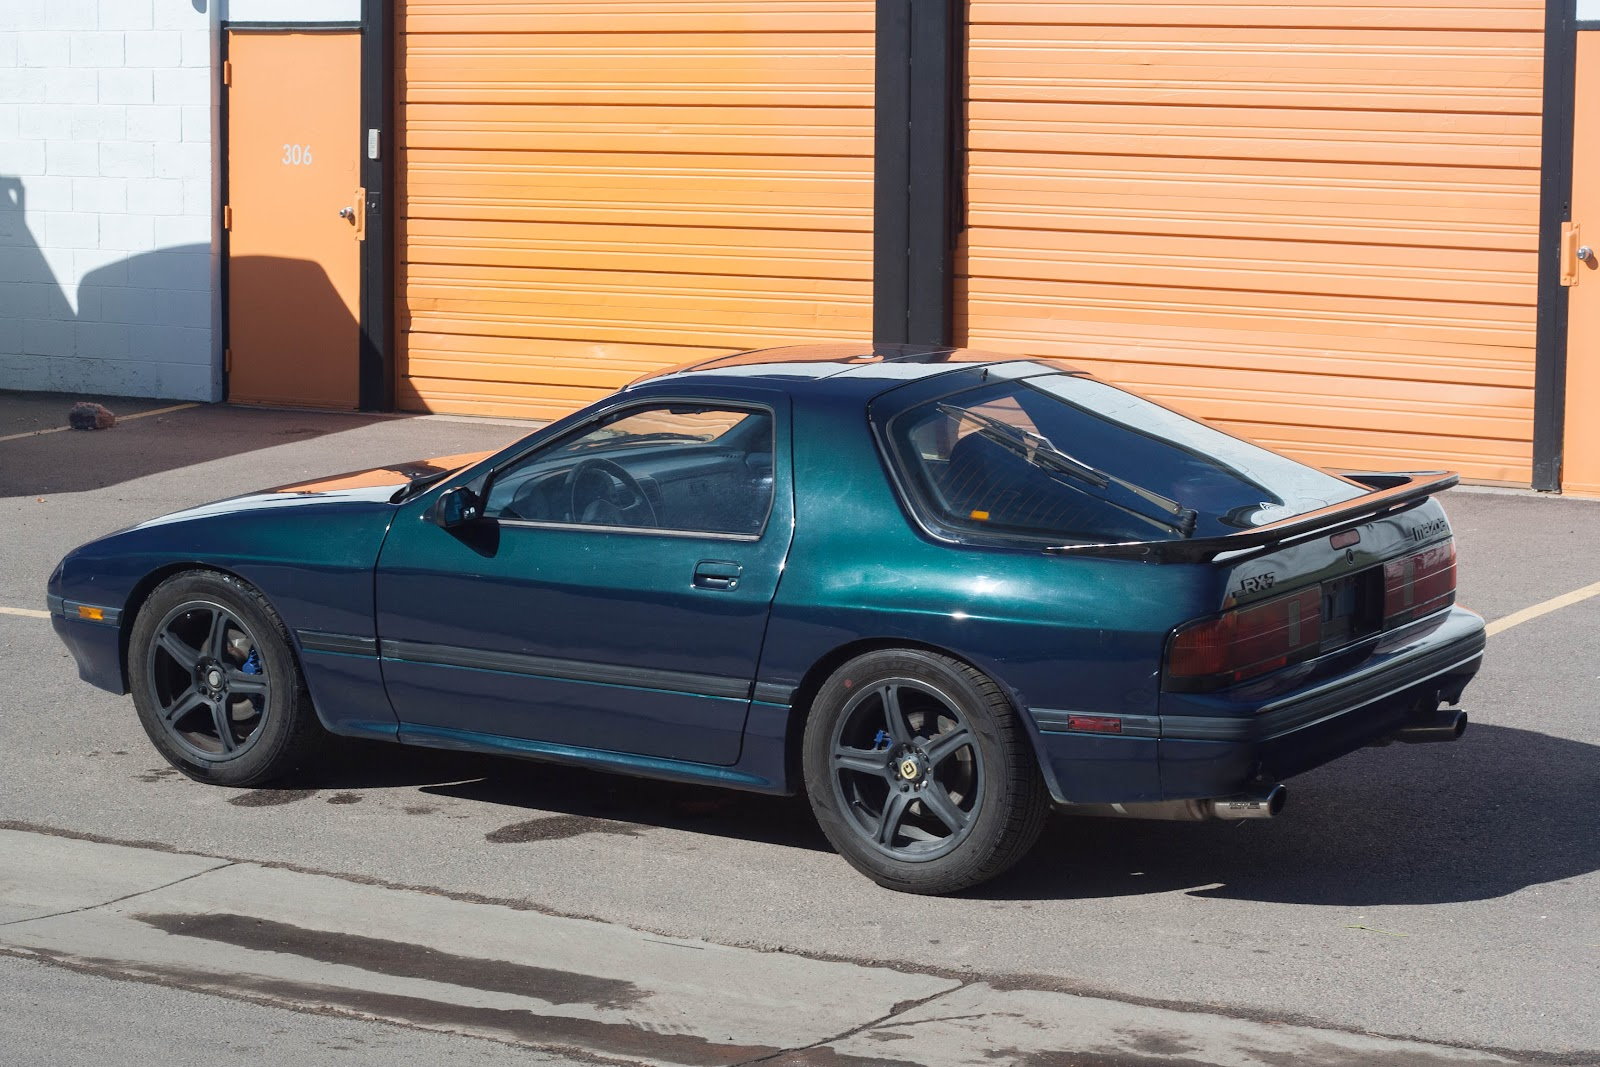 1988 Mazda RX-7 - Montego Blue Daily - Used - VIN JM1FC3311J0606254 - 88,367 Miles - Other - 2WD - Manual - Coupe - Blue - Denver, CO 80231, United States